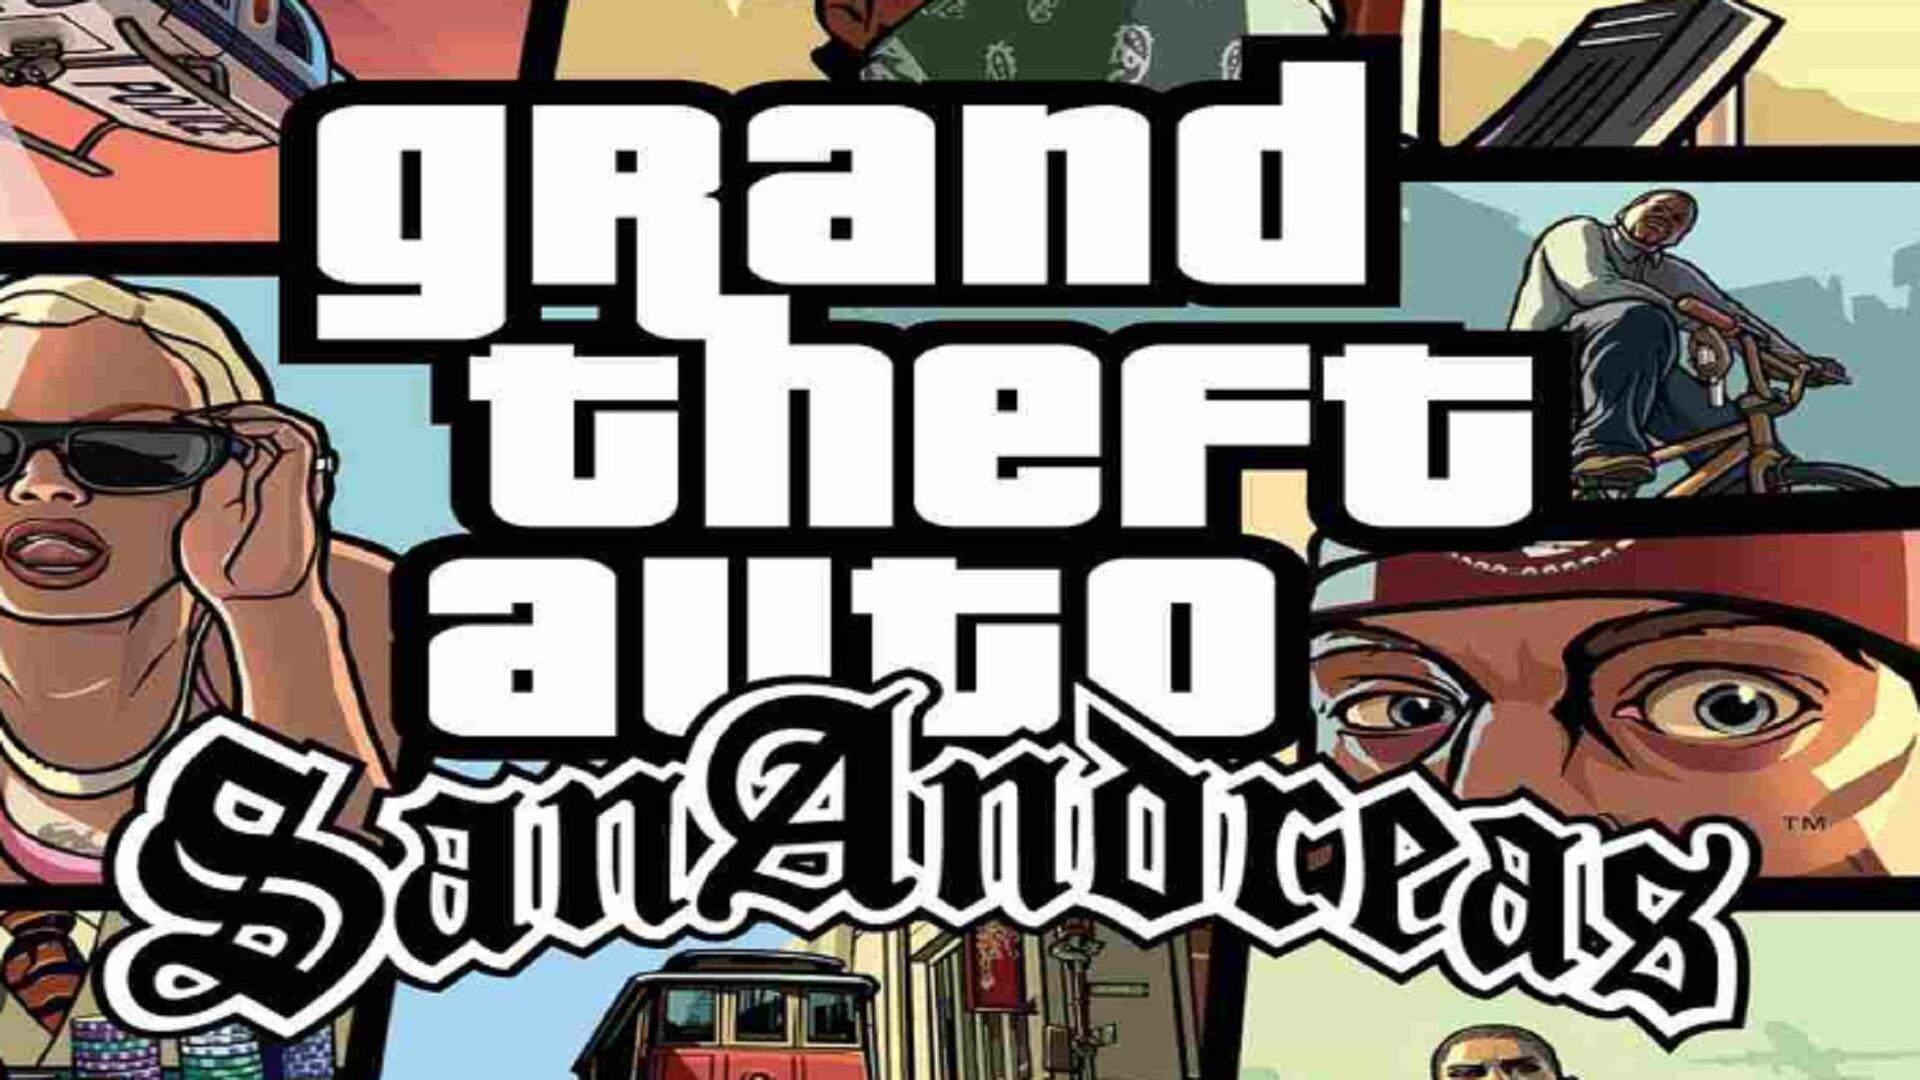 GTA San Andreas 2023 APK- Download